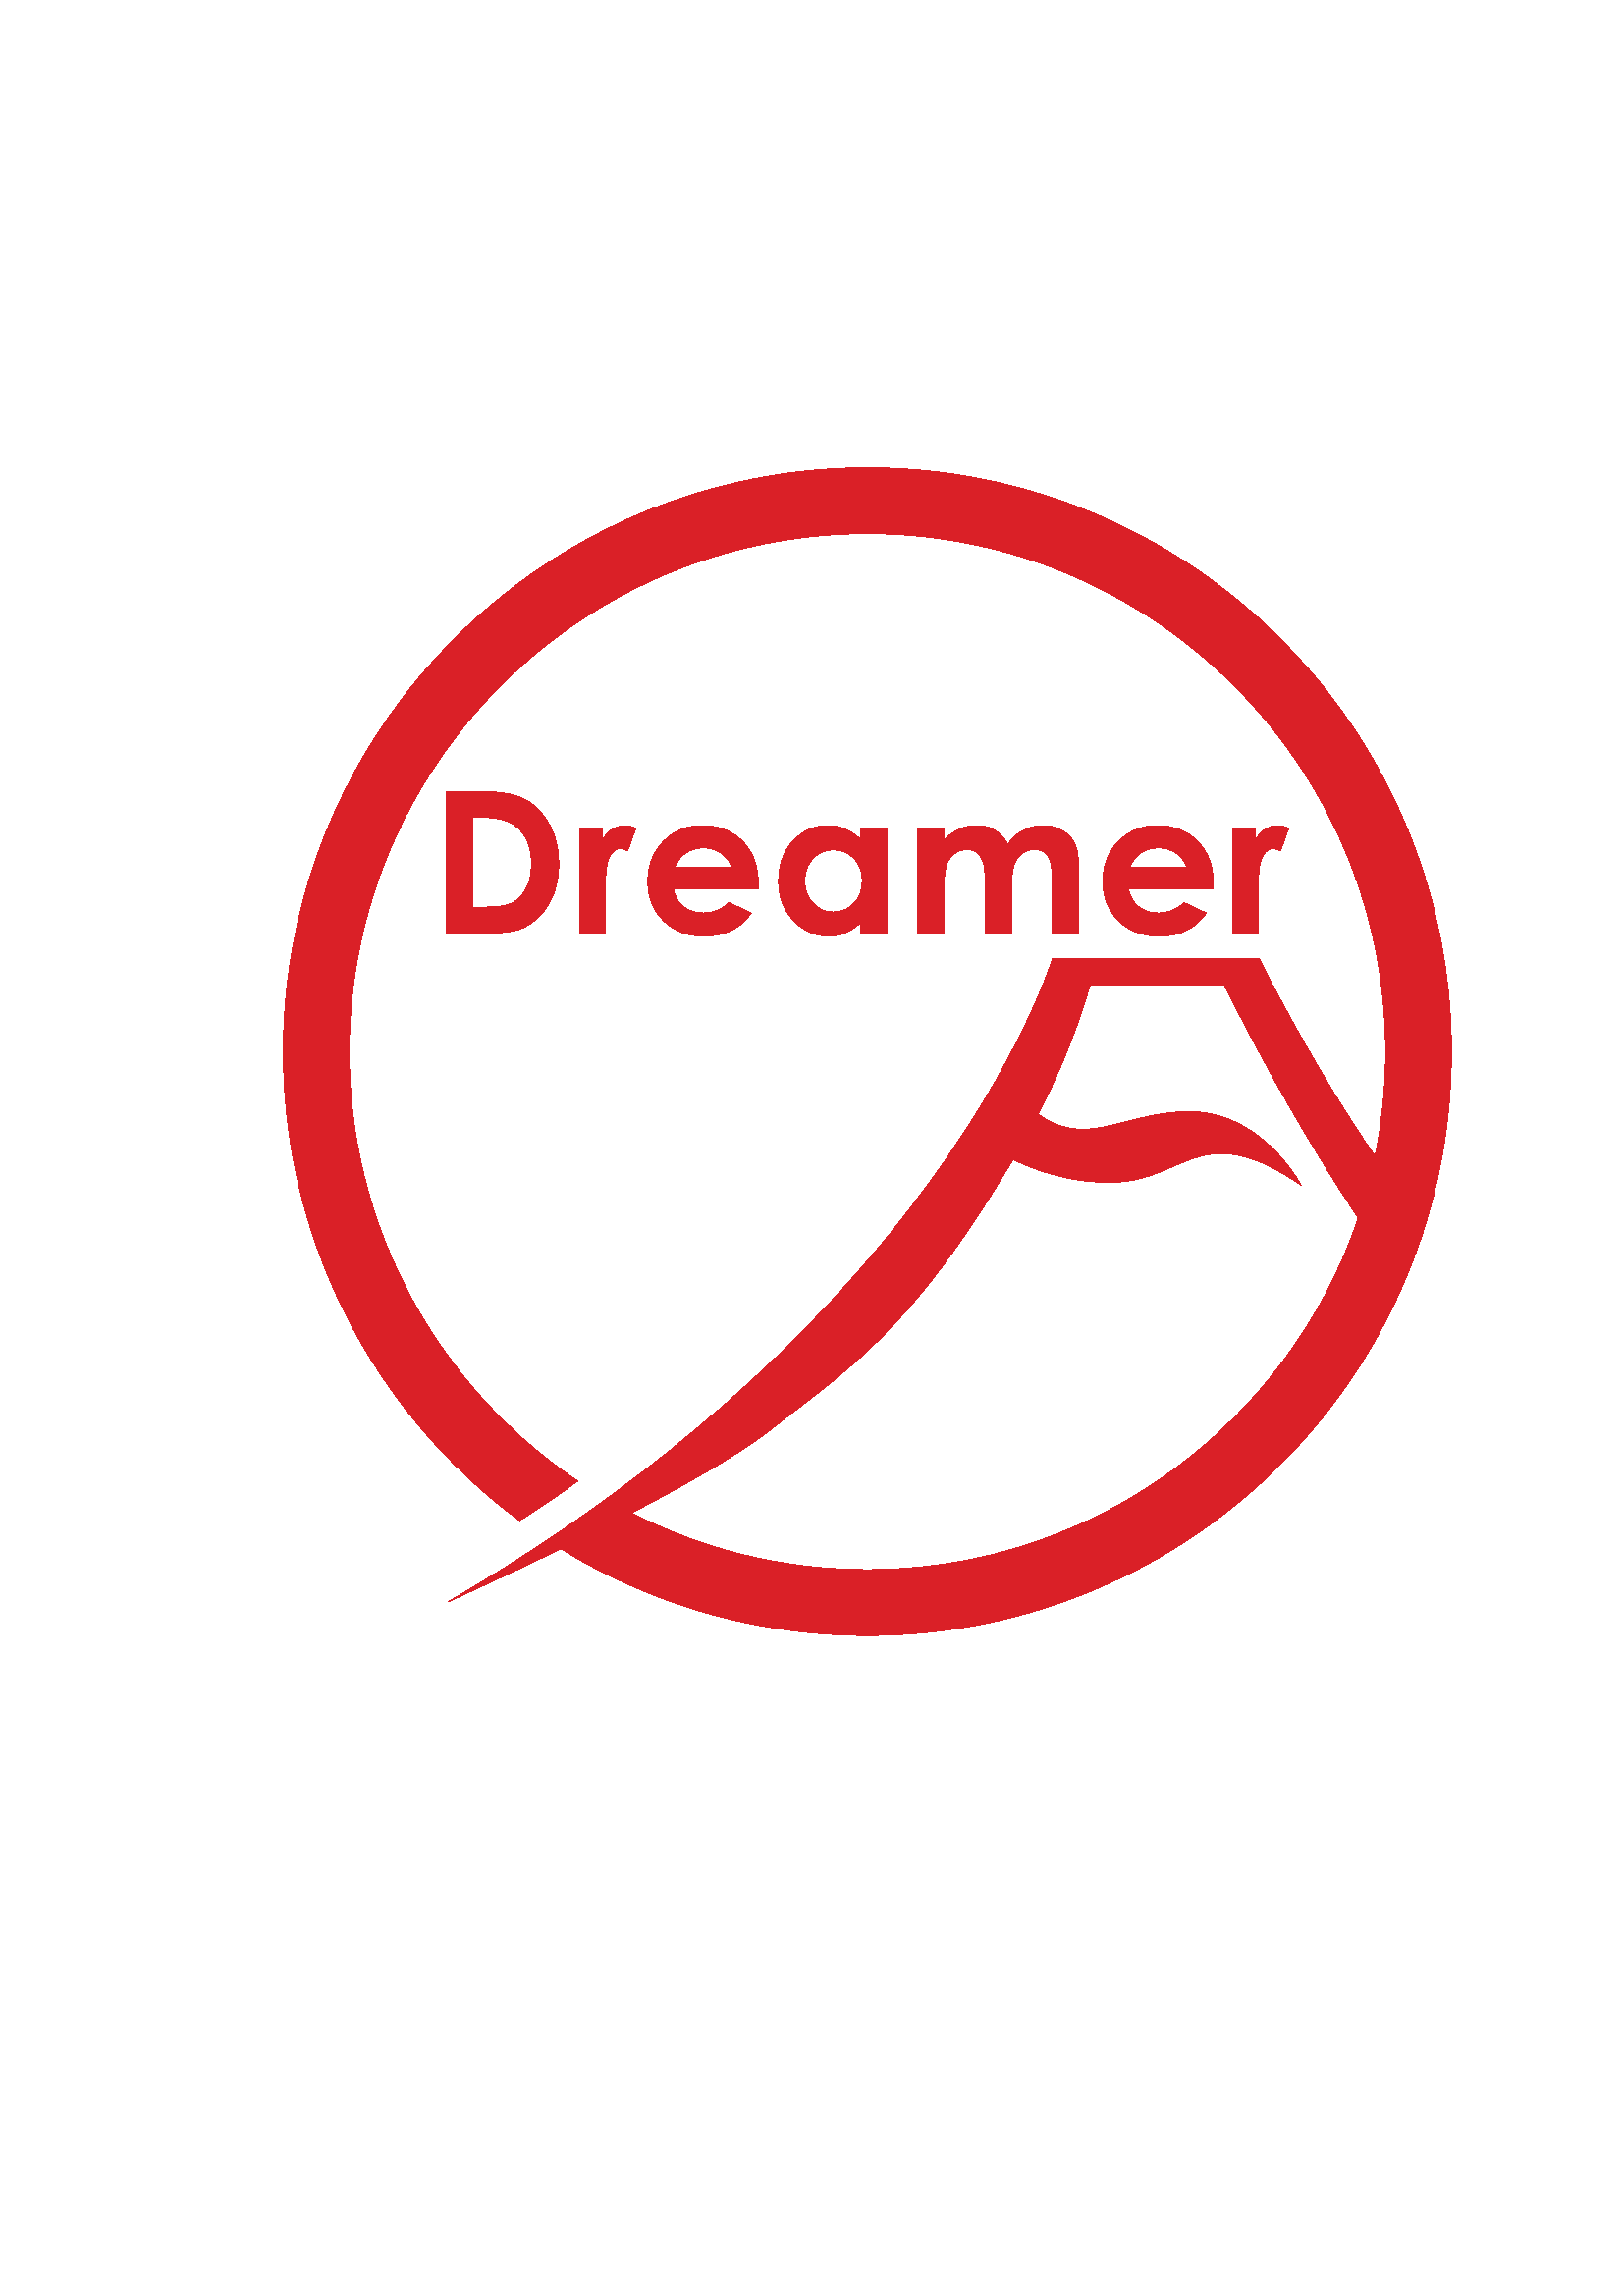 Dreamer__red_o8zeXX2